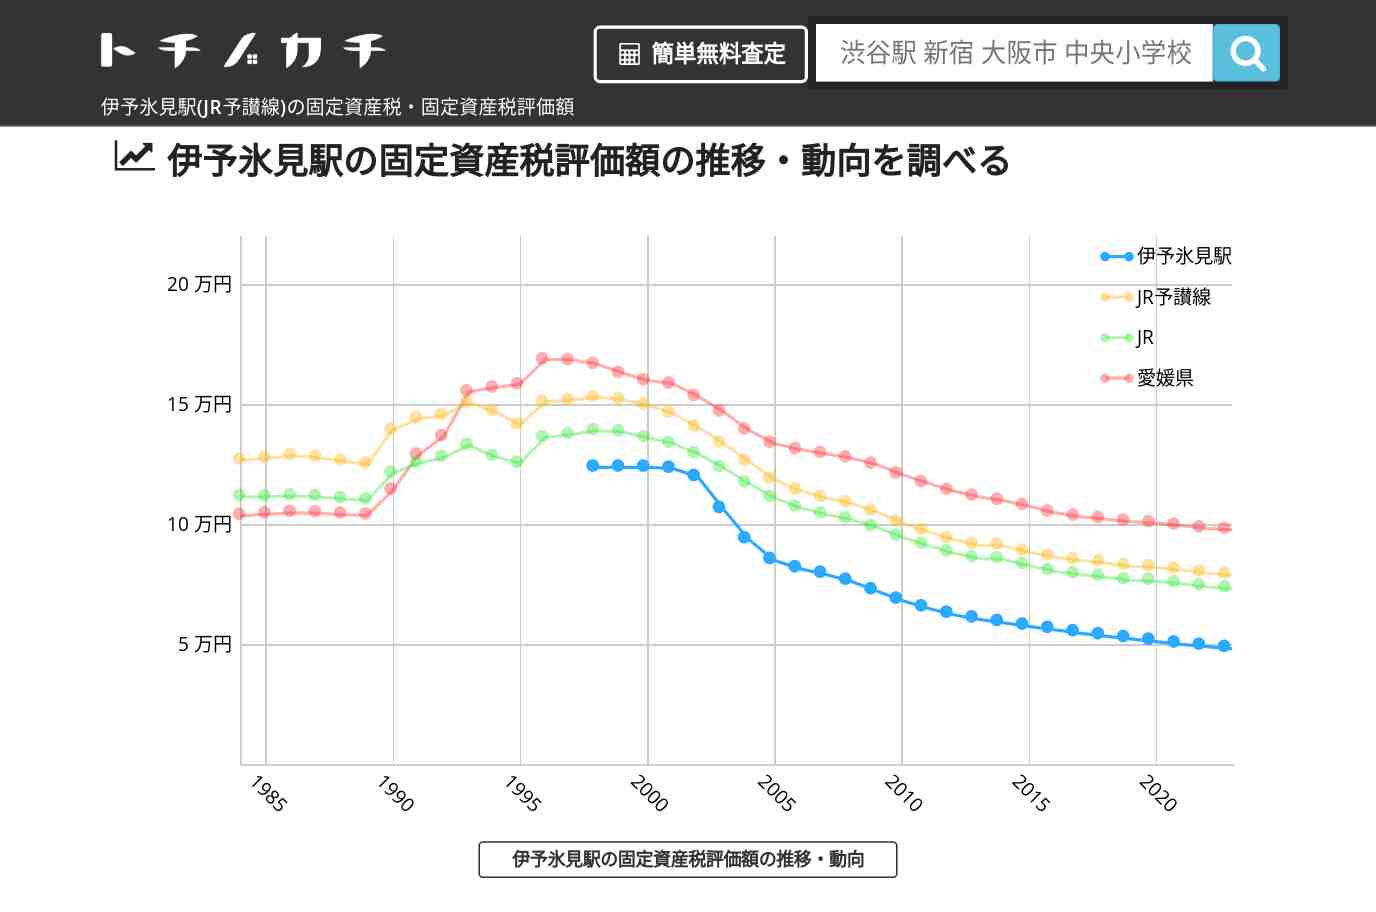 伊予氷見駅(JR予讃線)の固定資産税・固定資産税評価額 | トチノカチ